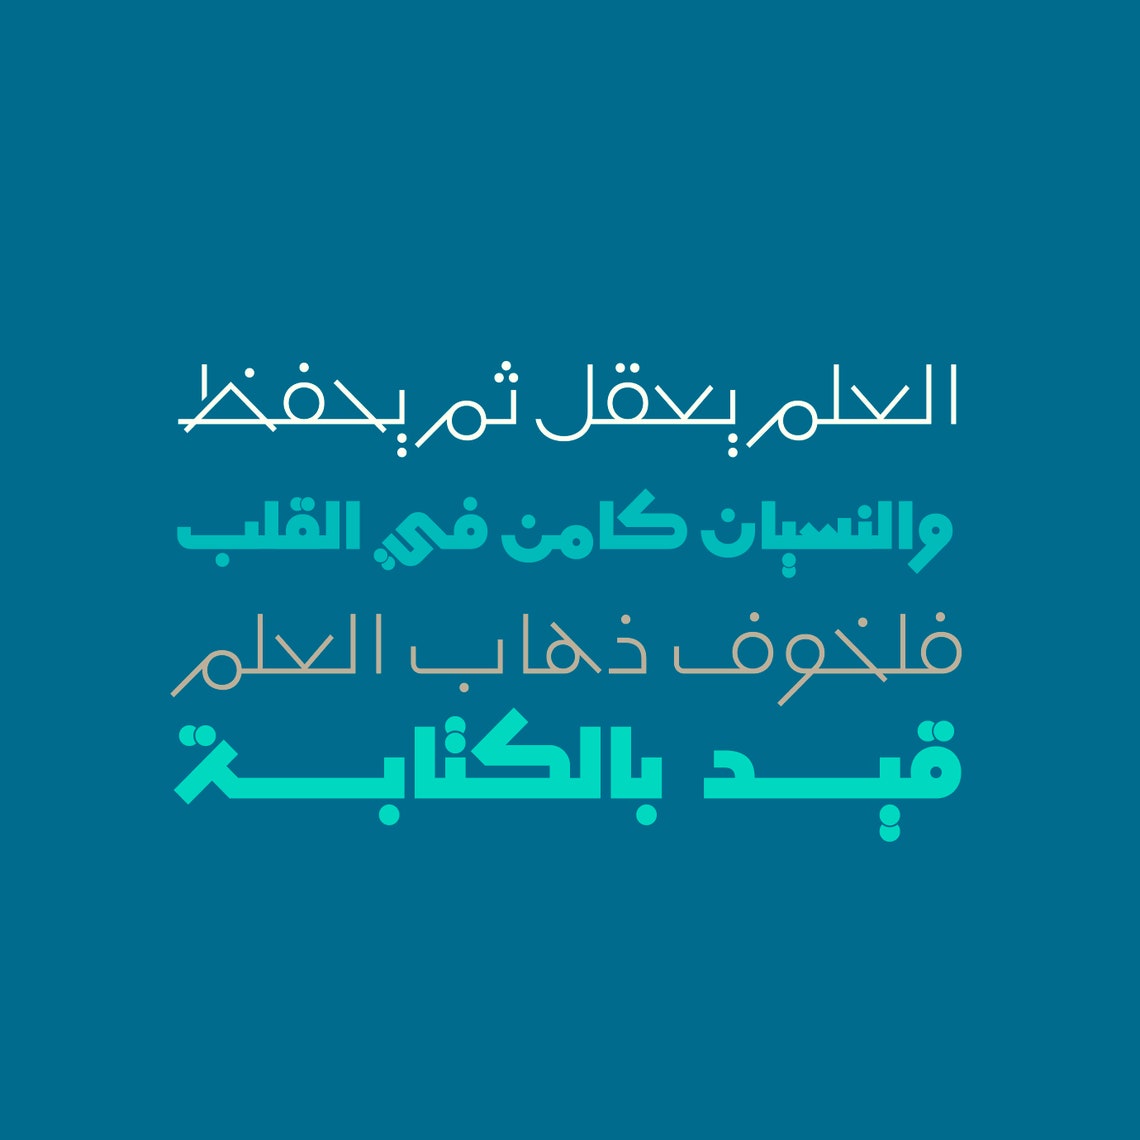 Mobtakar Arabic Typeface arabic Font Islamic Calligraphy - Etsy